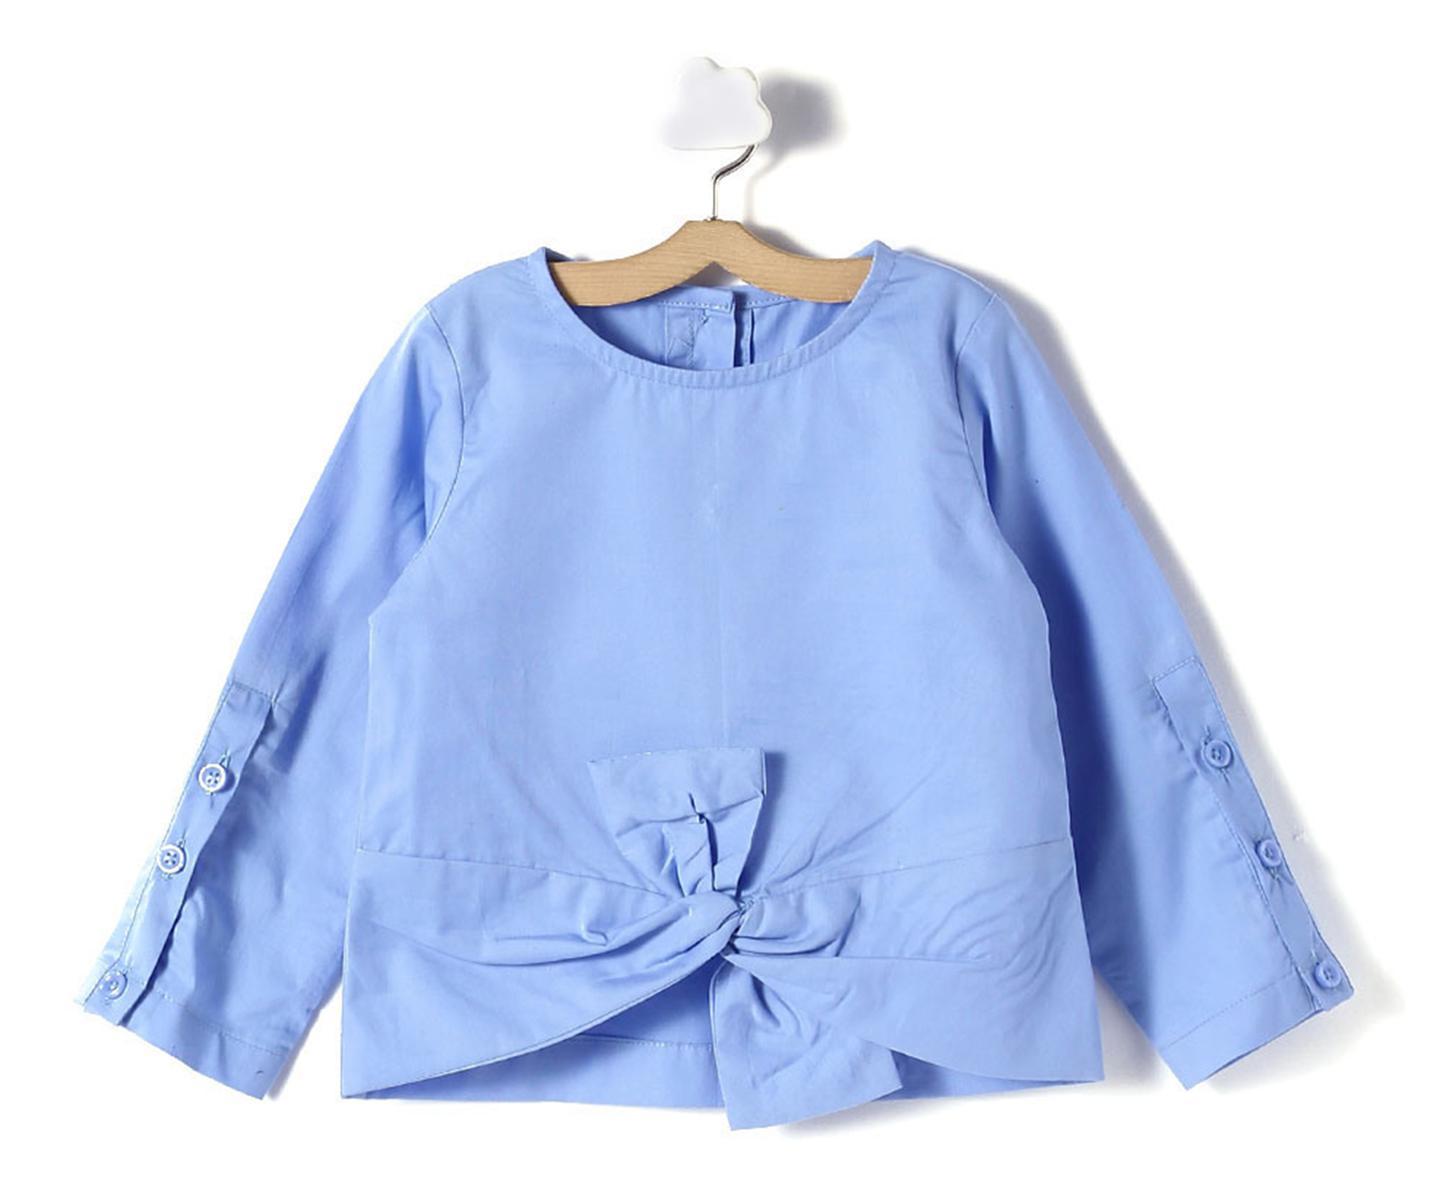 stylish-blue-top-with-skirt-10513027BK, Kids Clothing, Corduroy,Twill Girl Skirt Set